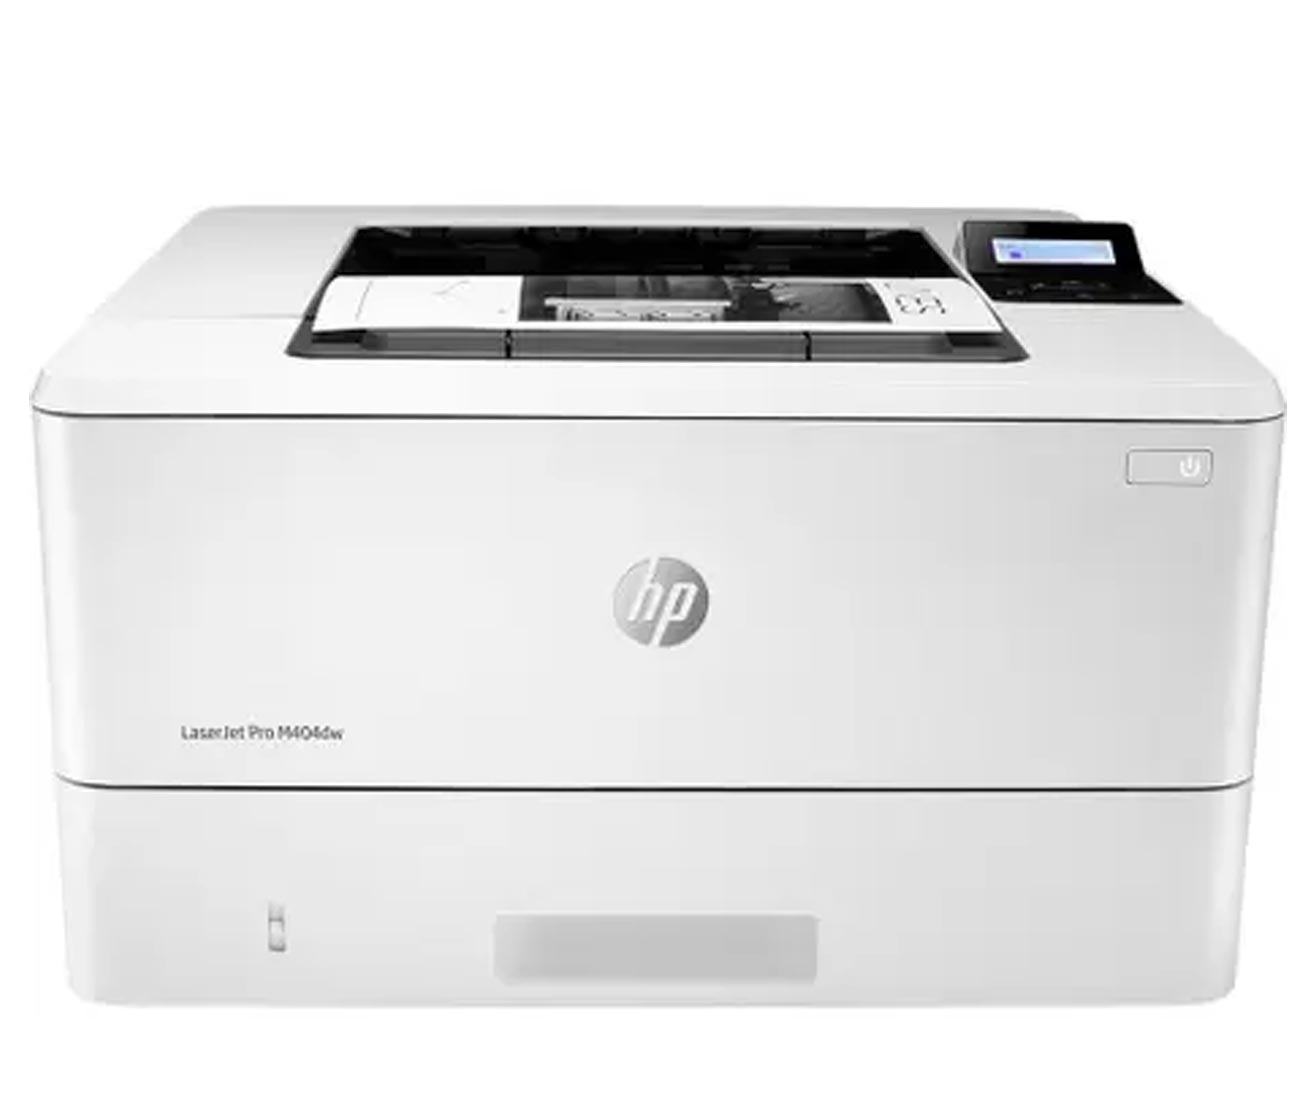 Impressora - HP - M404 Laser Mono